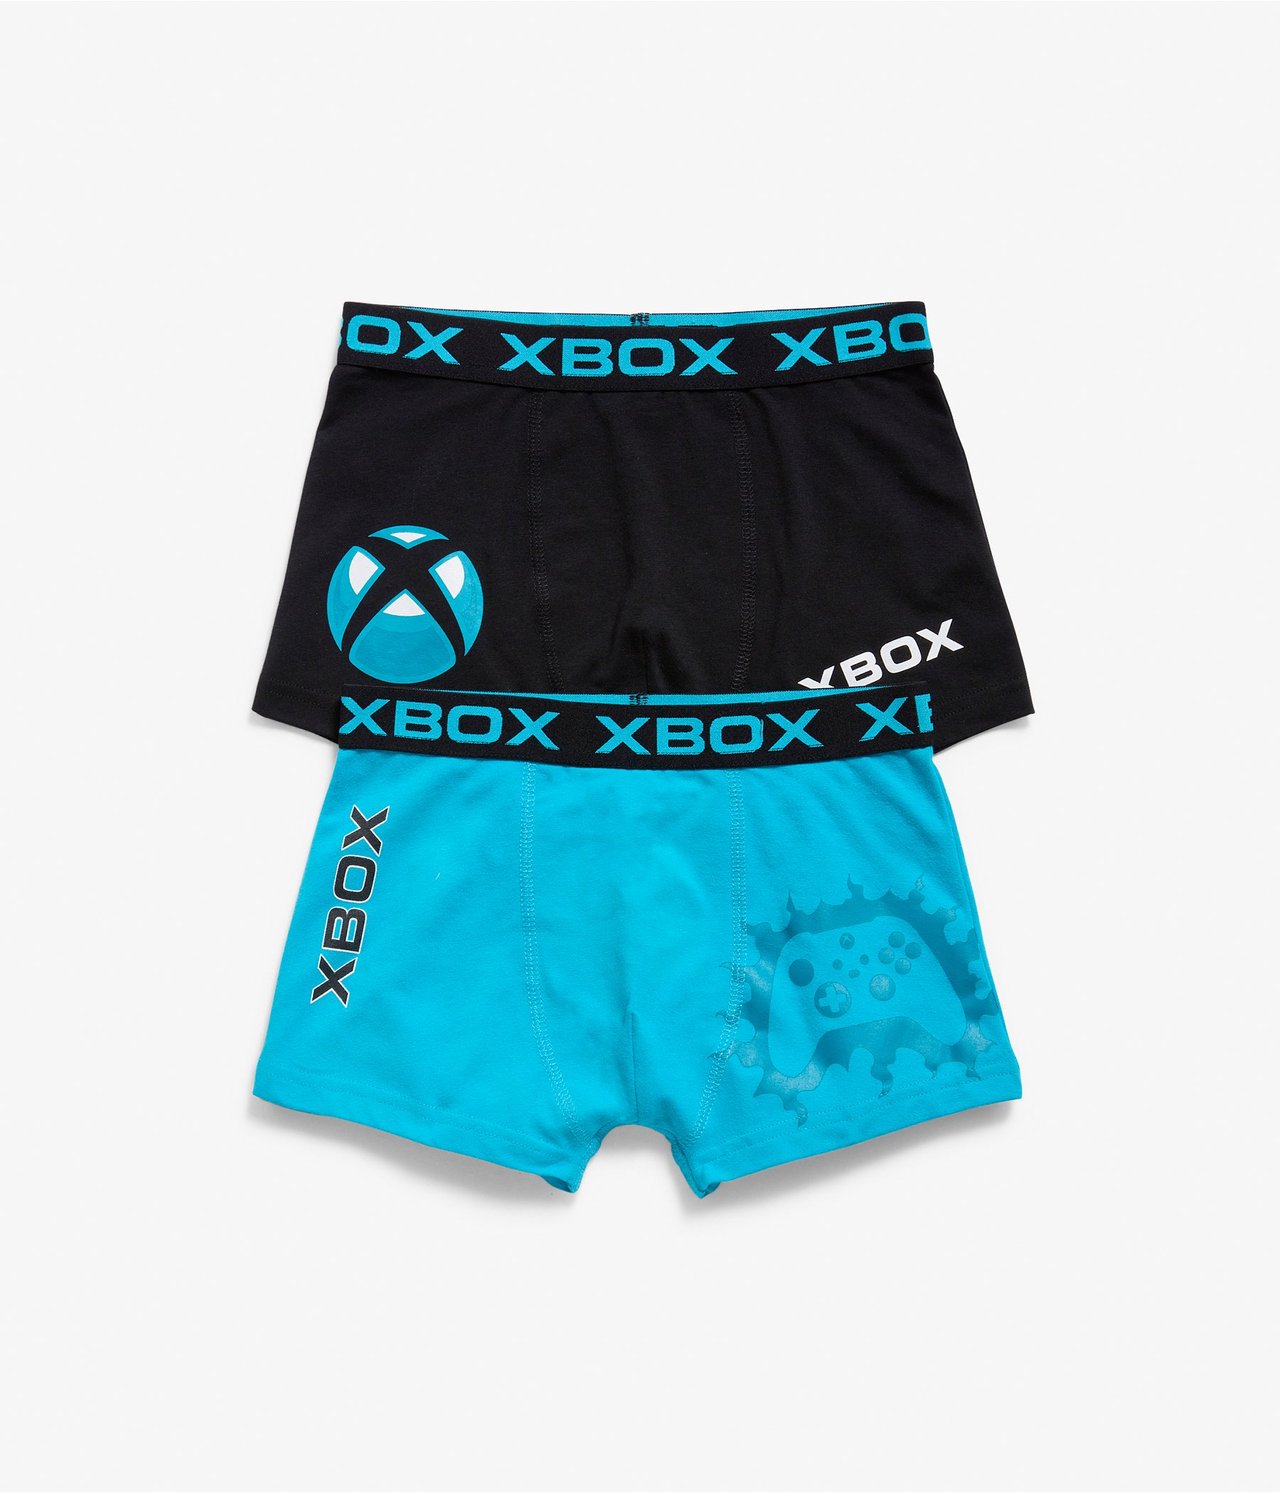 2 kpl:n pakkaus Xbox-boksereita